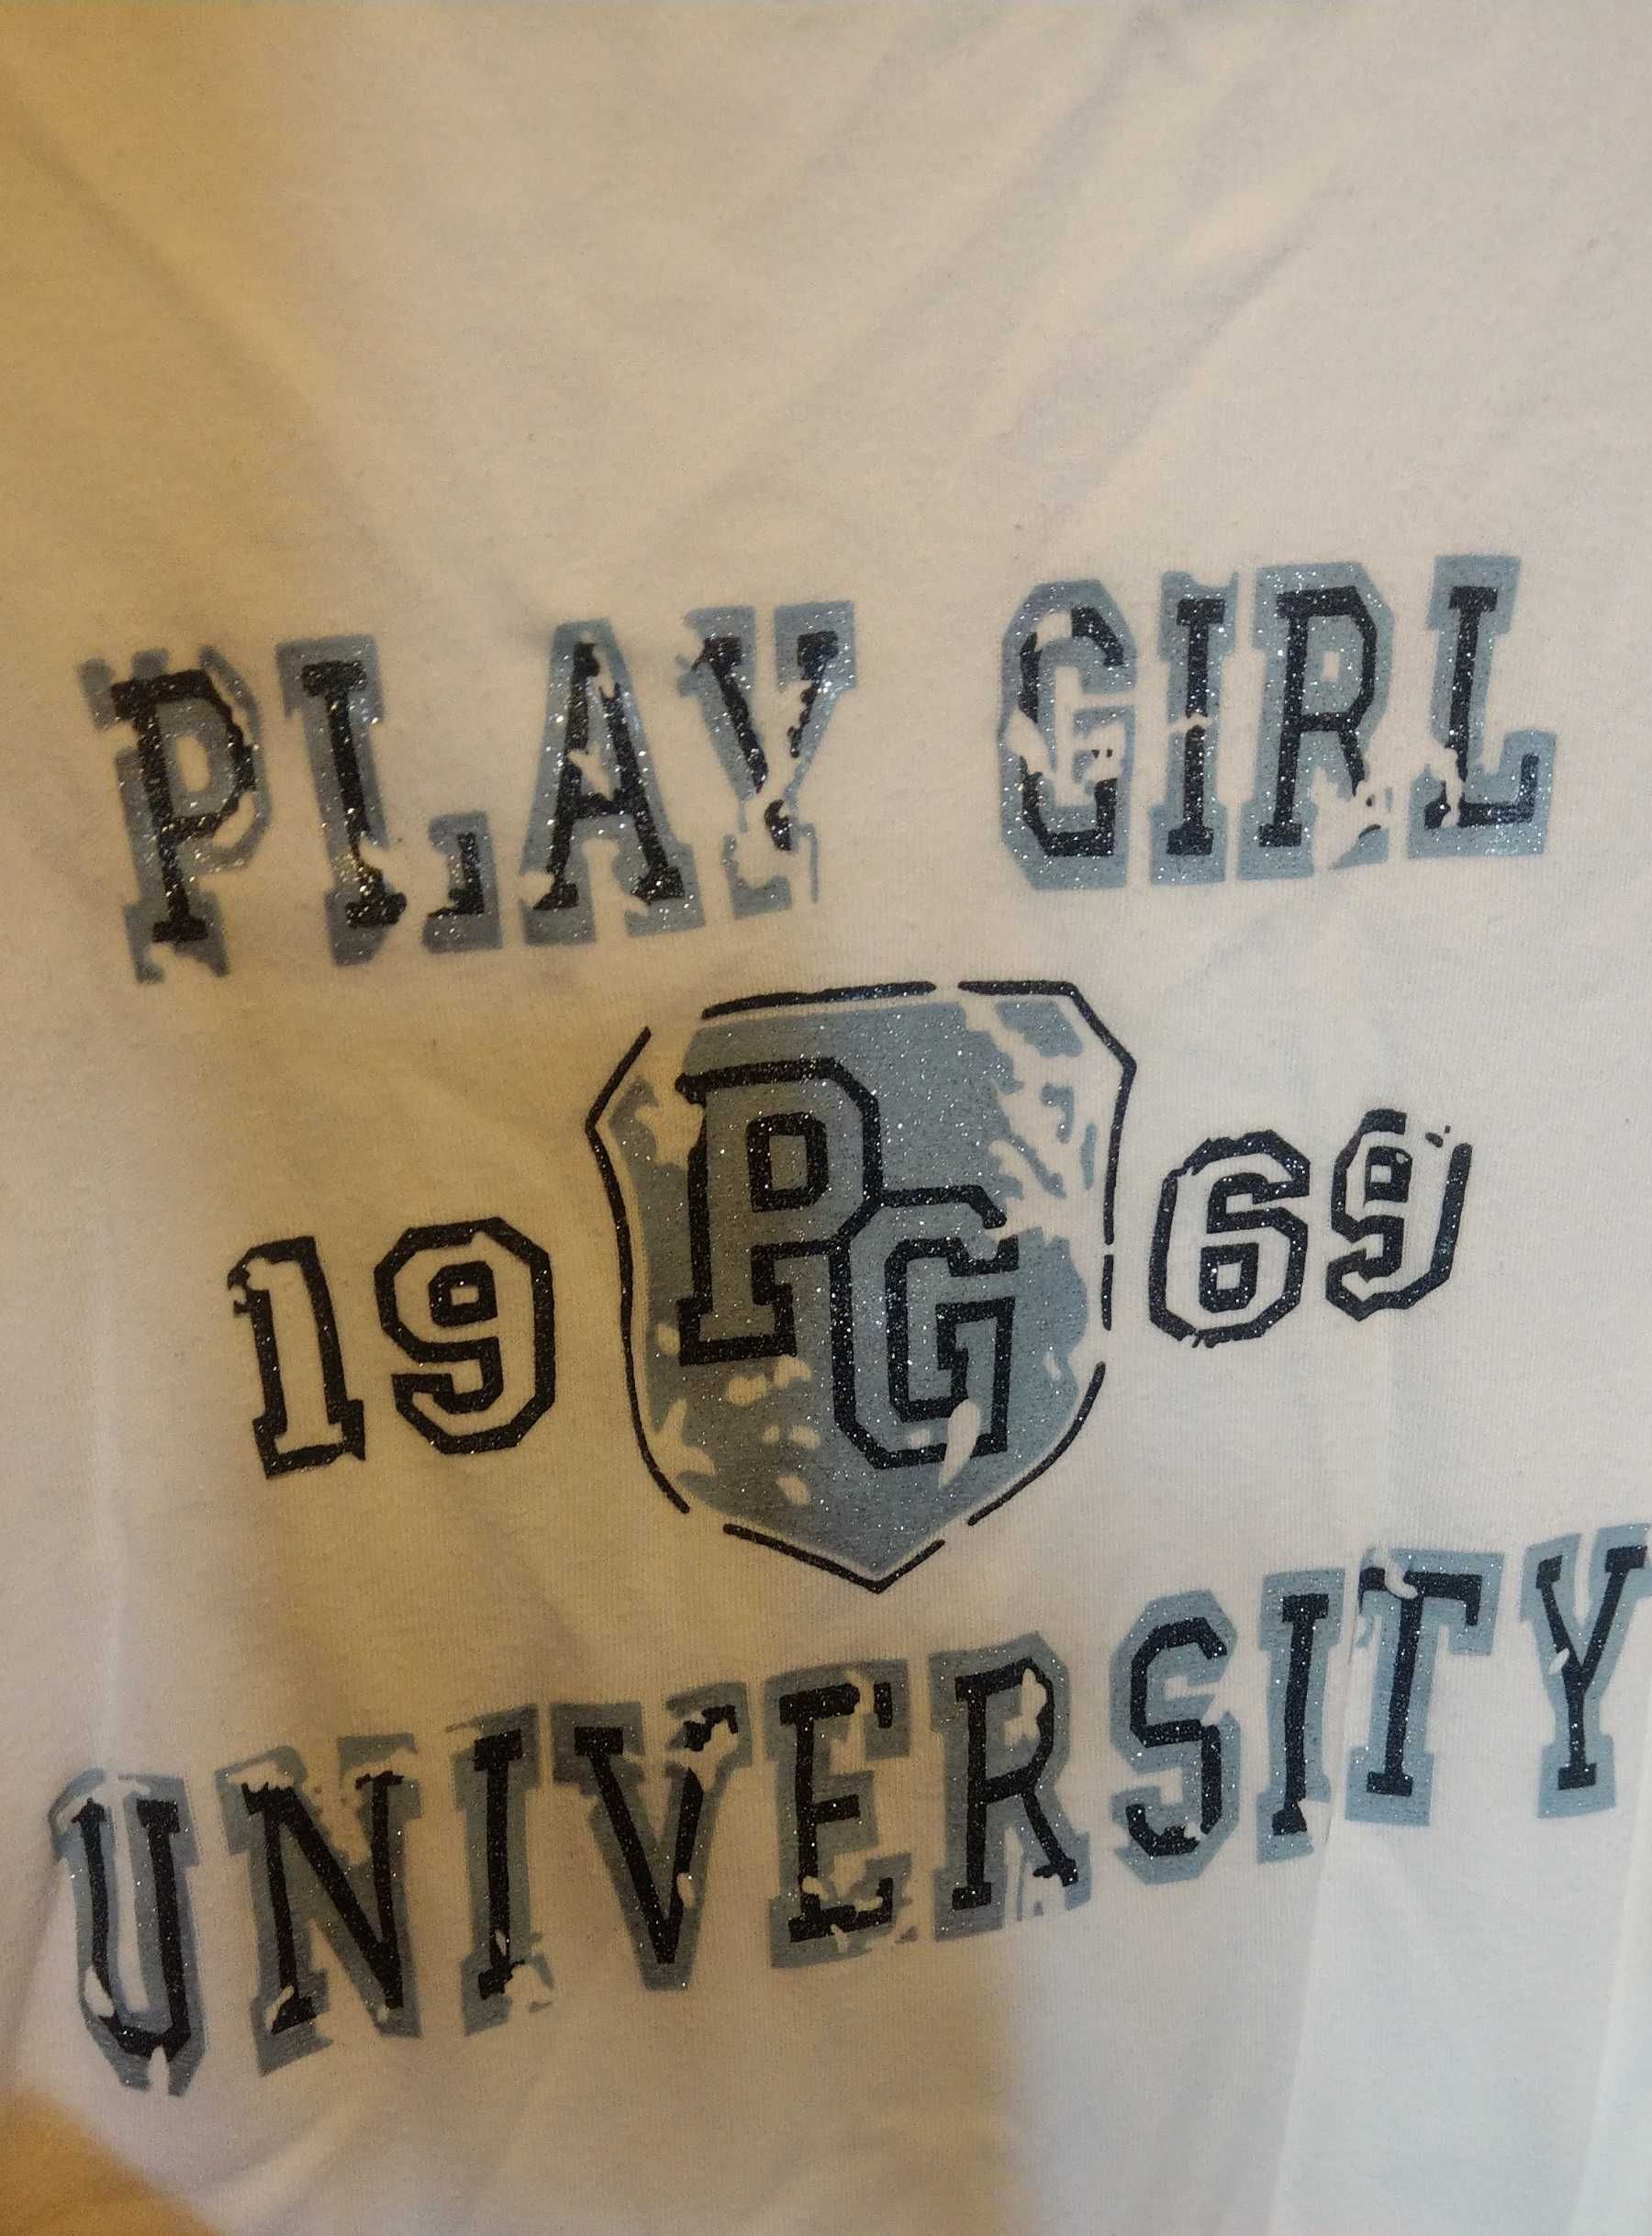 Bluzka biała Play Girl 1969 L M XL